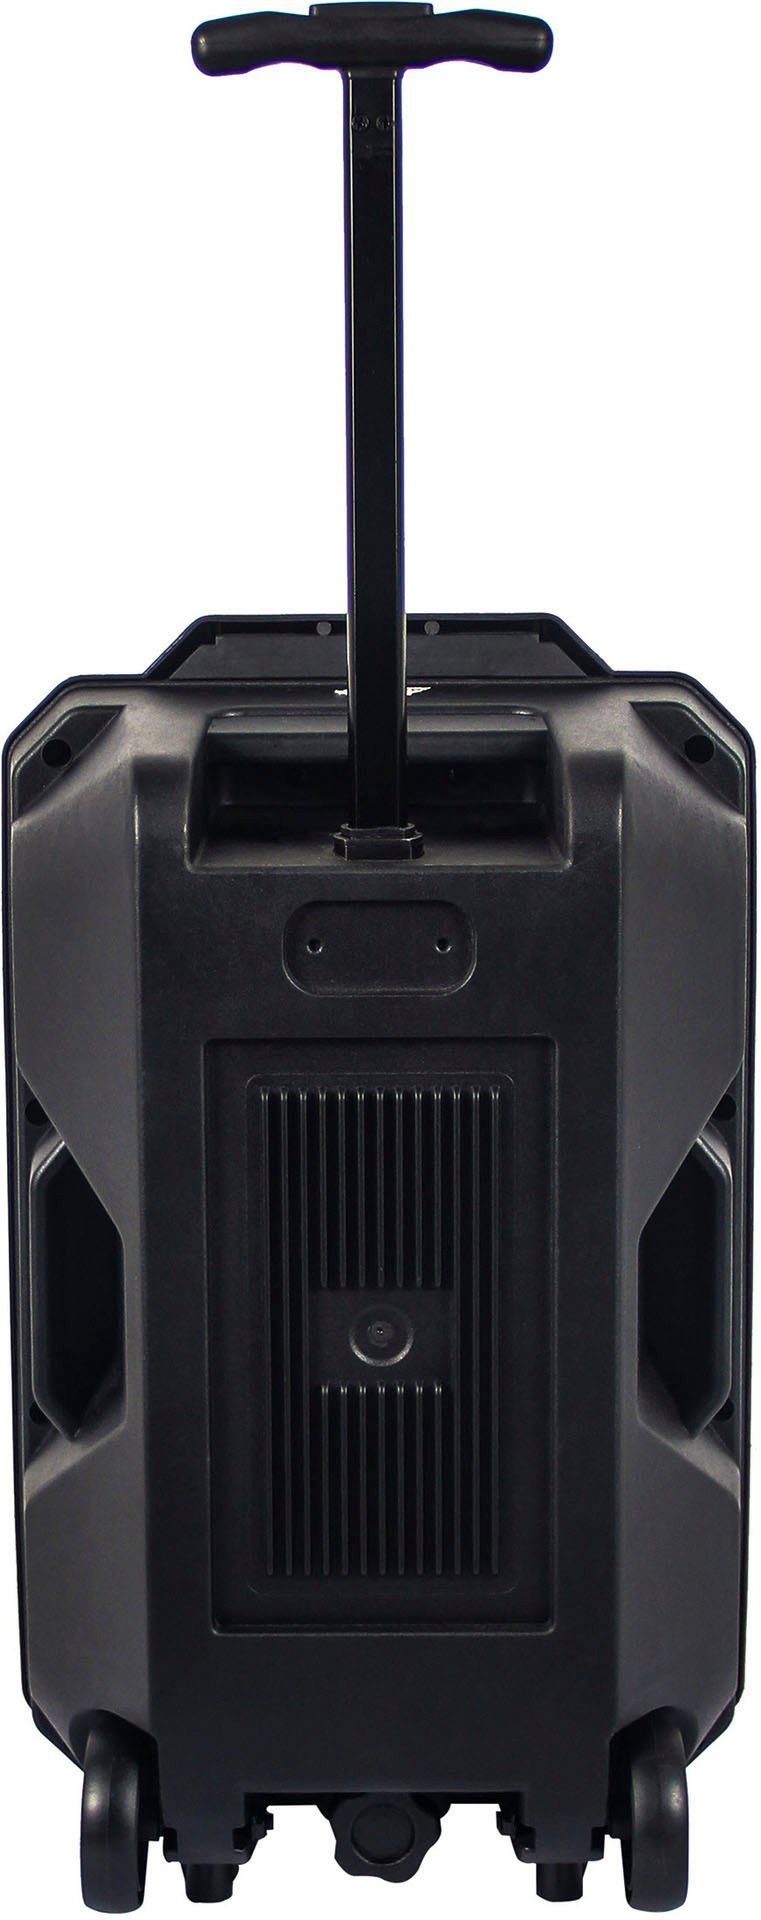 Portable-Lautsprecher W) TSP-120 (Bluetooth, 8 Denver